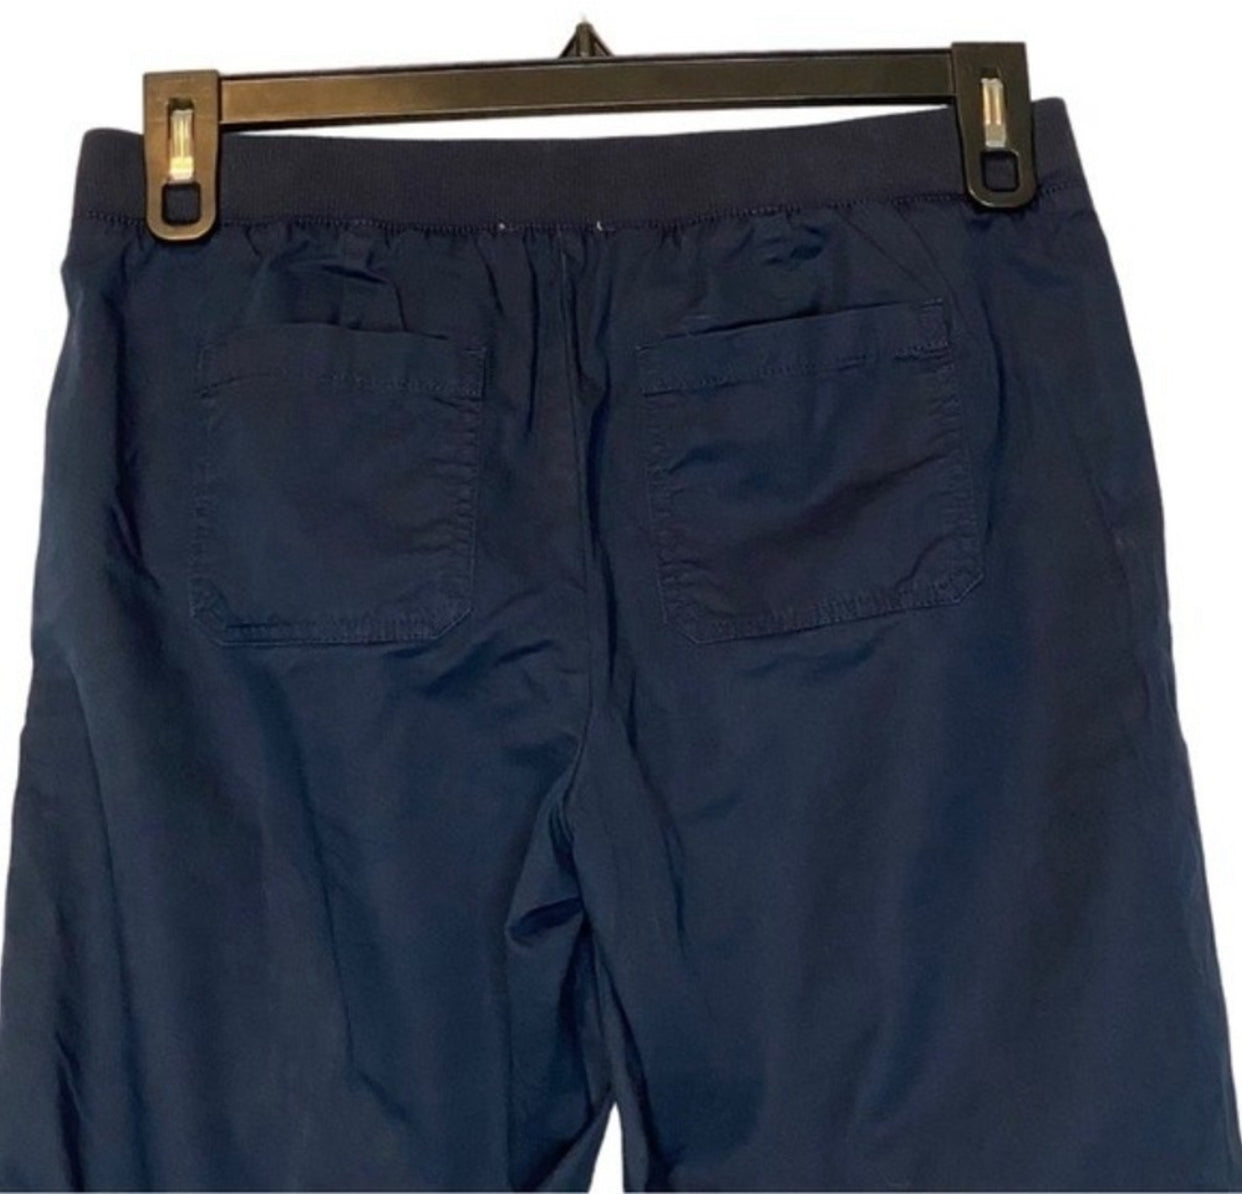 Talbots Roll-Tab Pull-On Navy Blue Drawstring Waist Pants - Size 6P